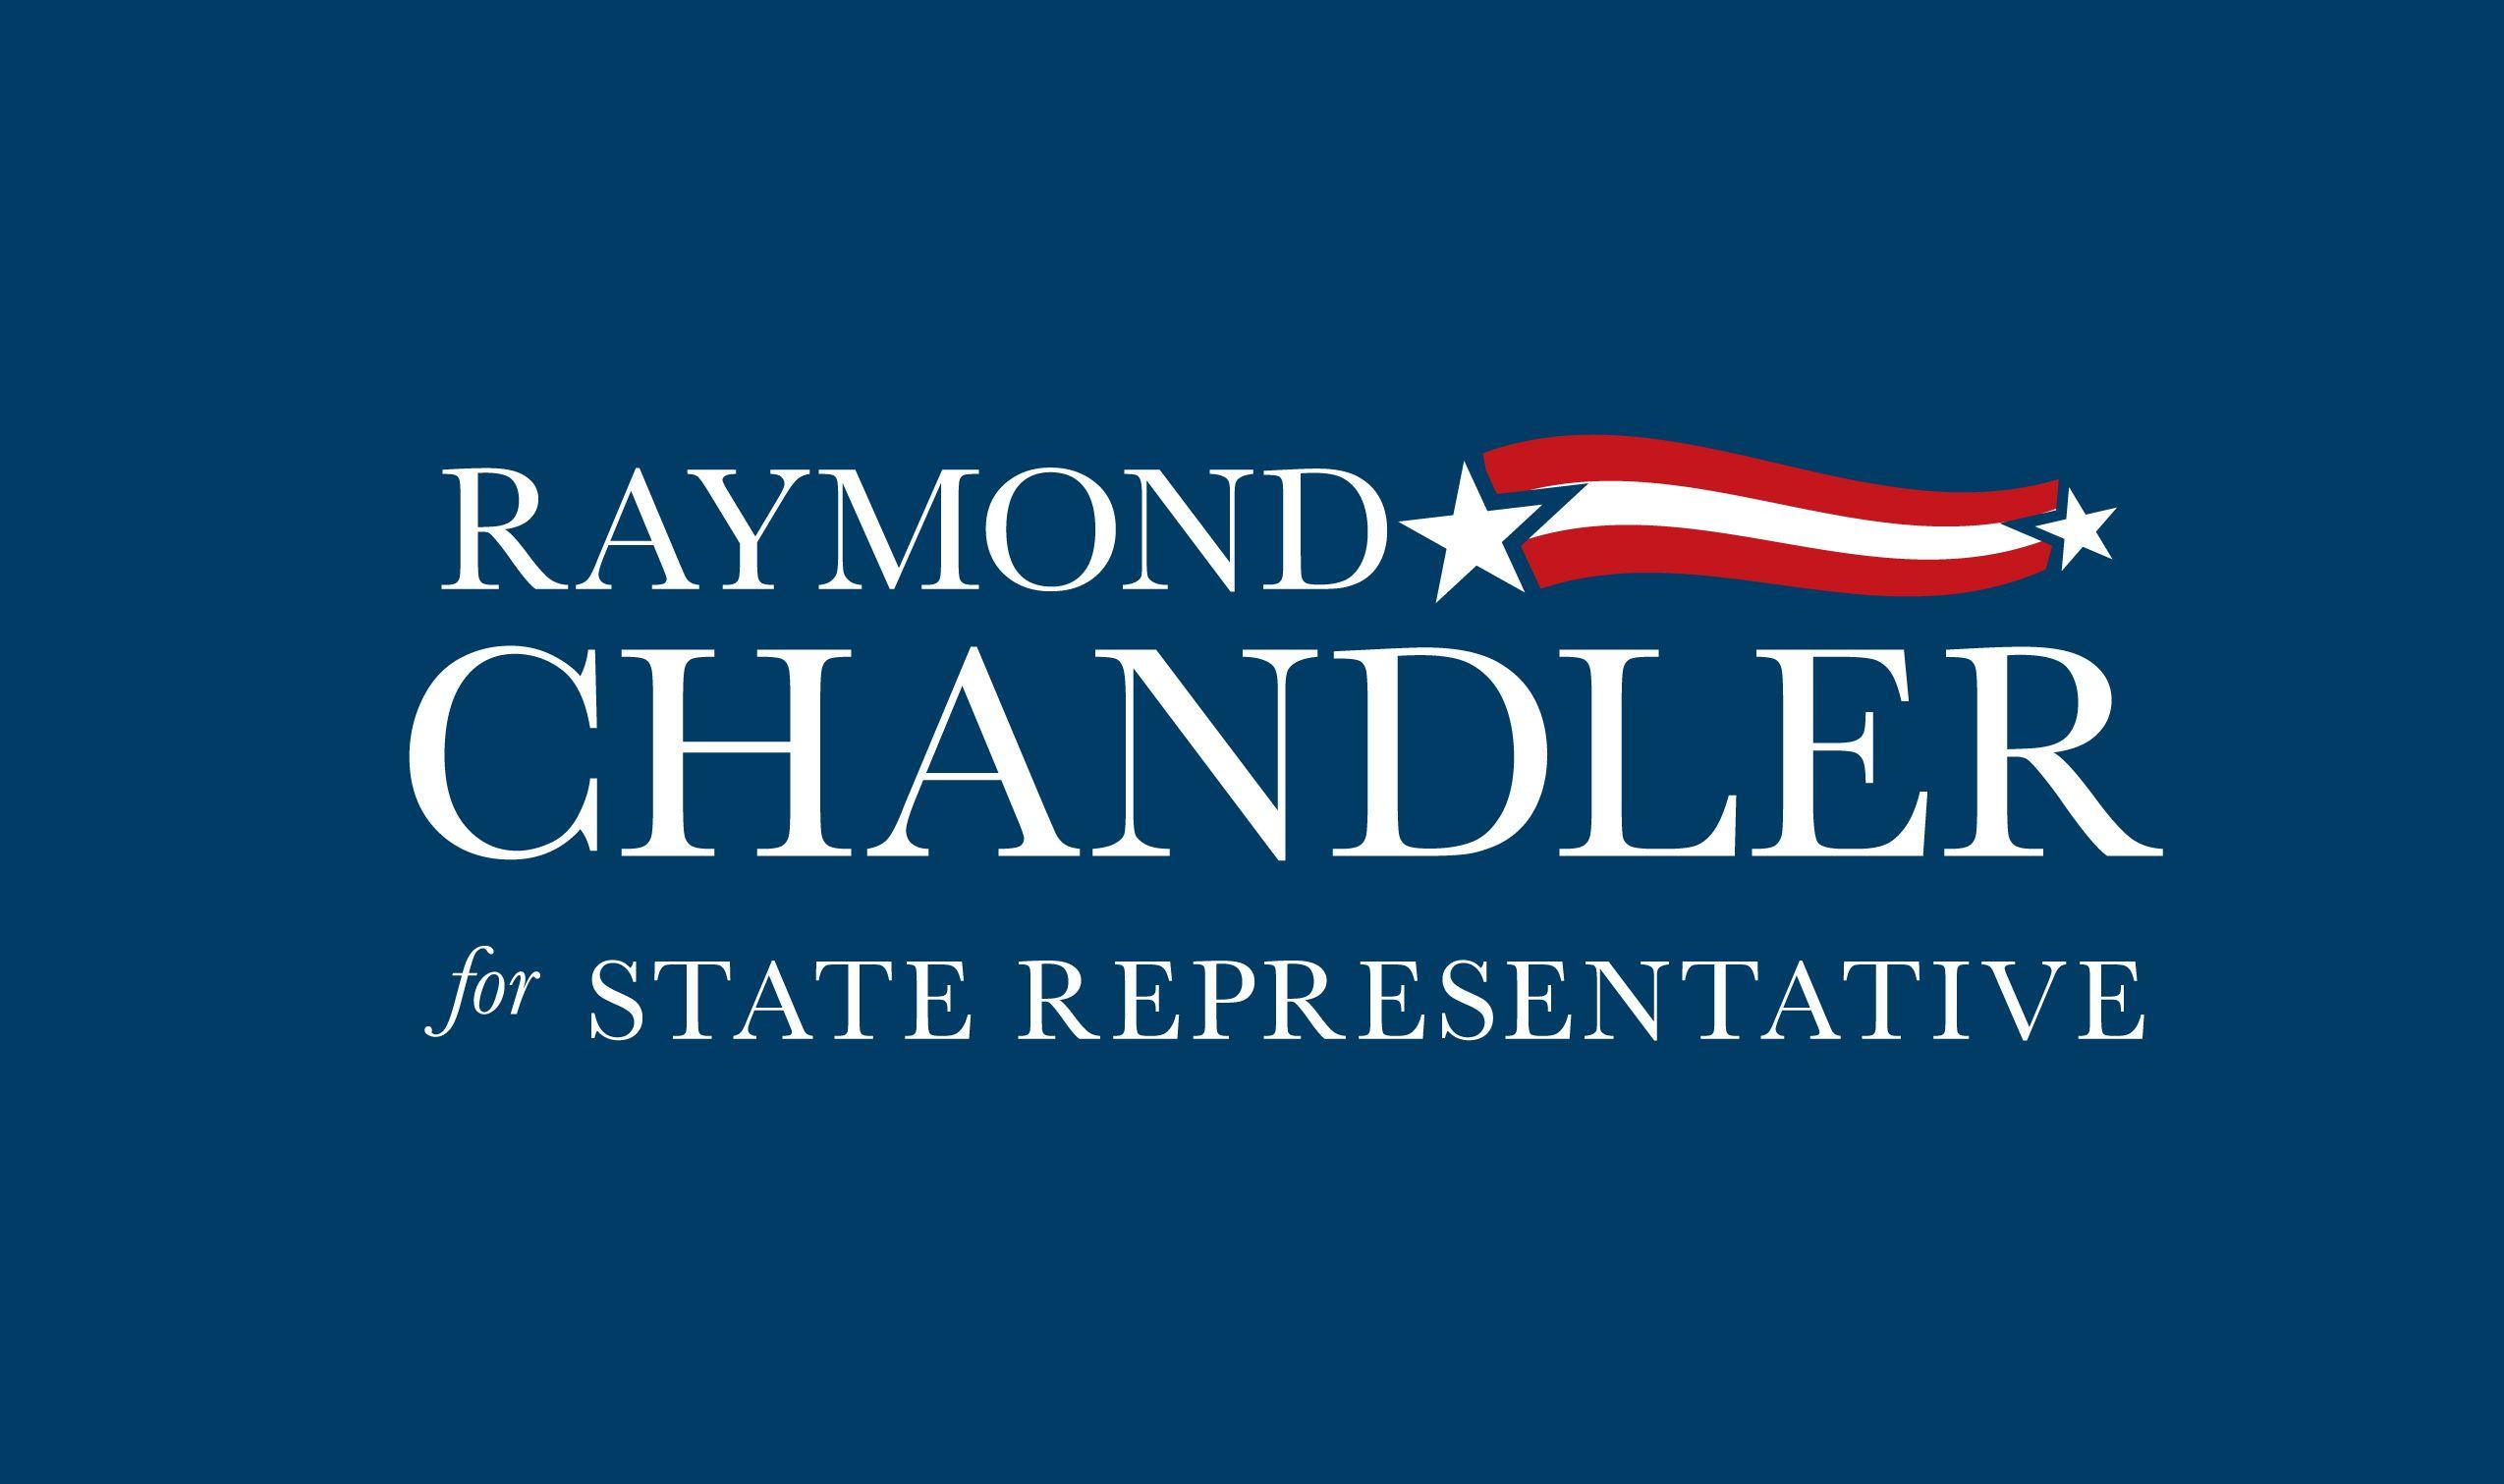 Representative Logo - Raymond Chandler for State Representative logo's Creative